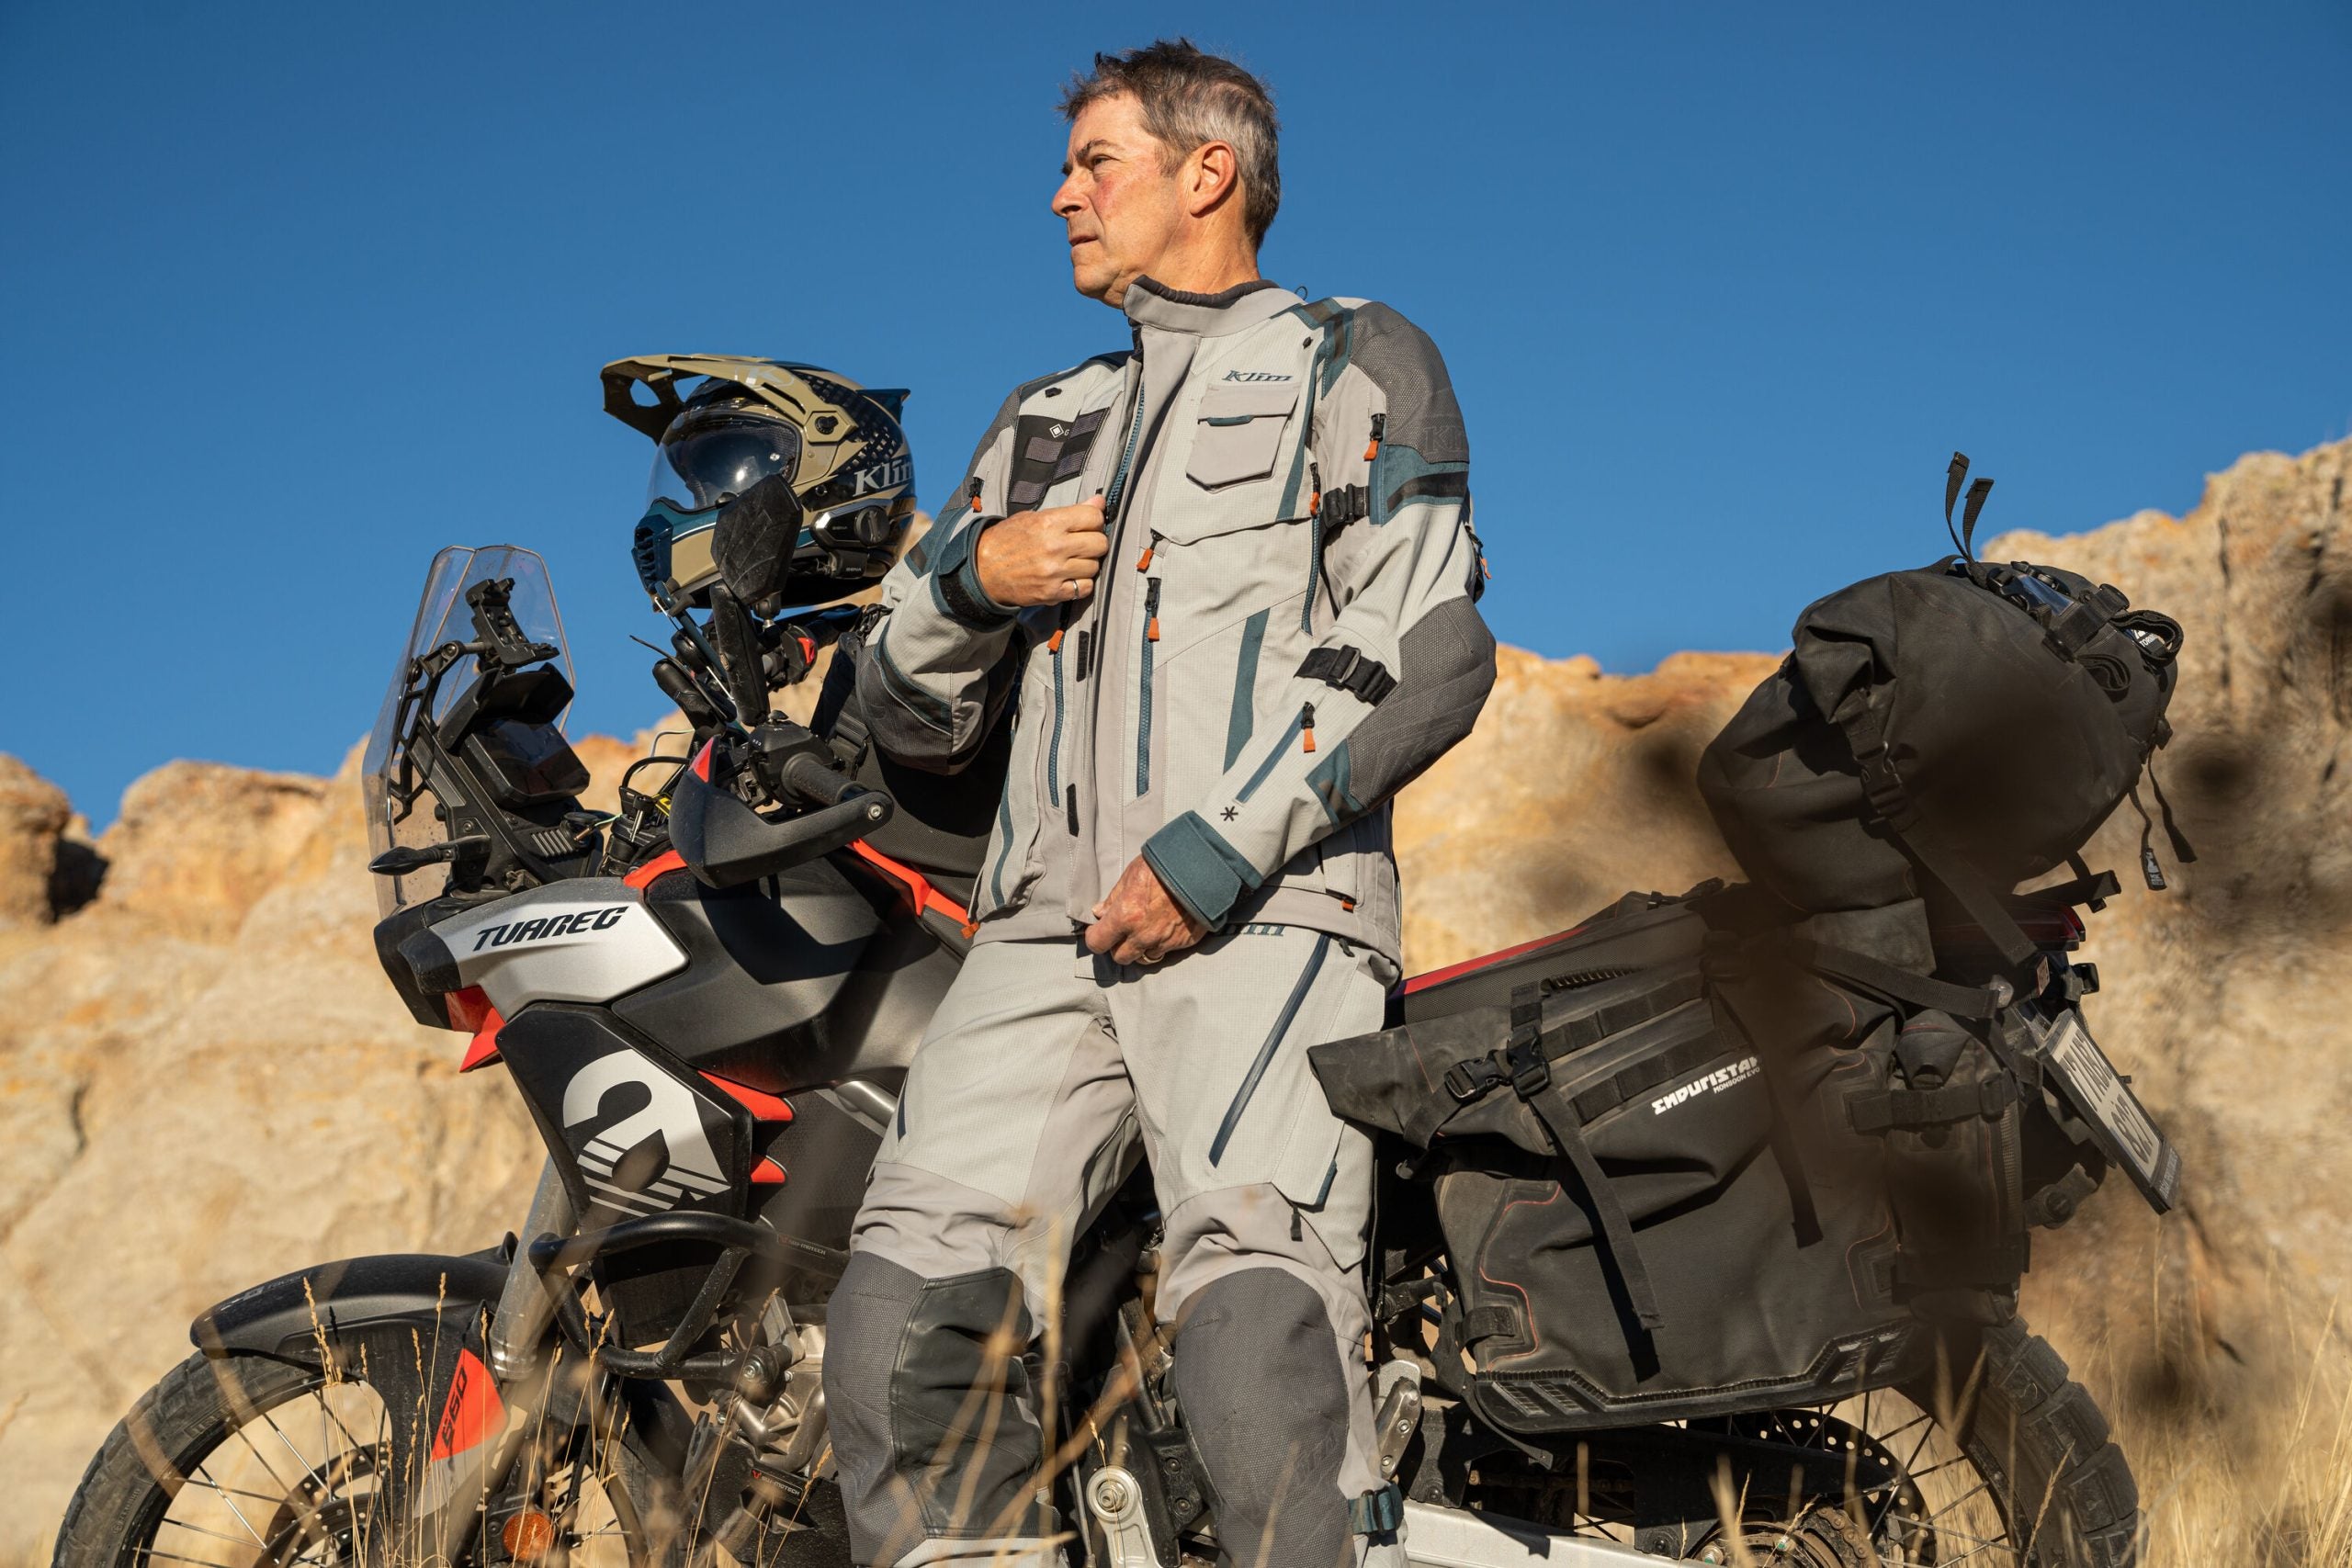 KLIM Releases Re-Designed Badlands Pro A3 Gear - Adventure Rider